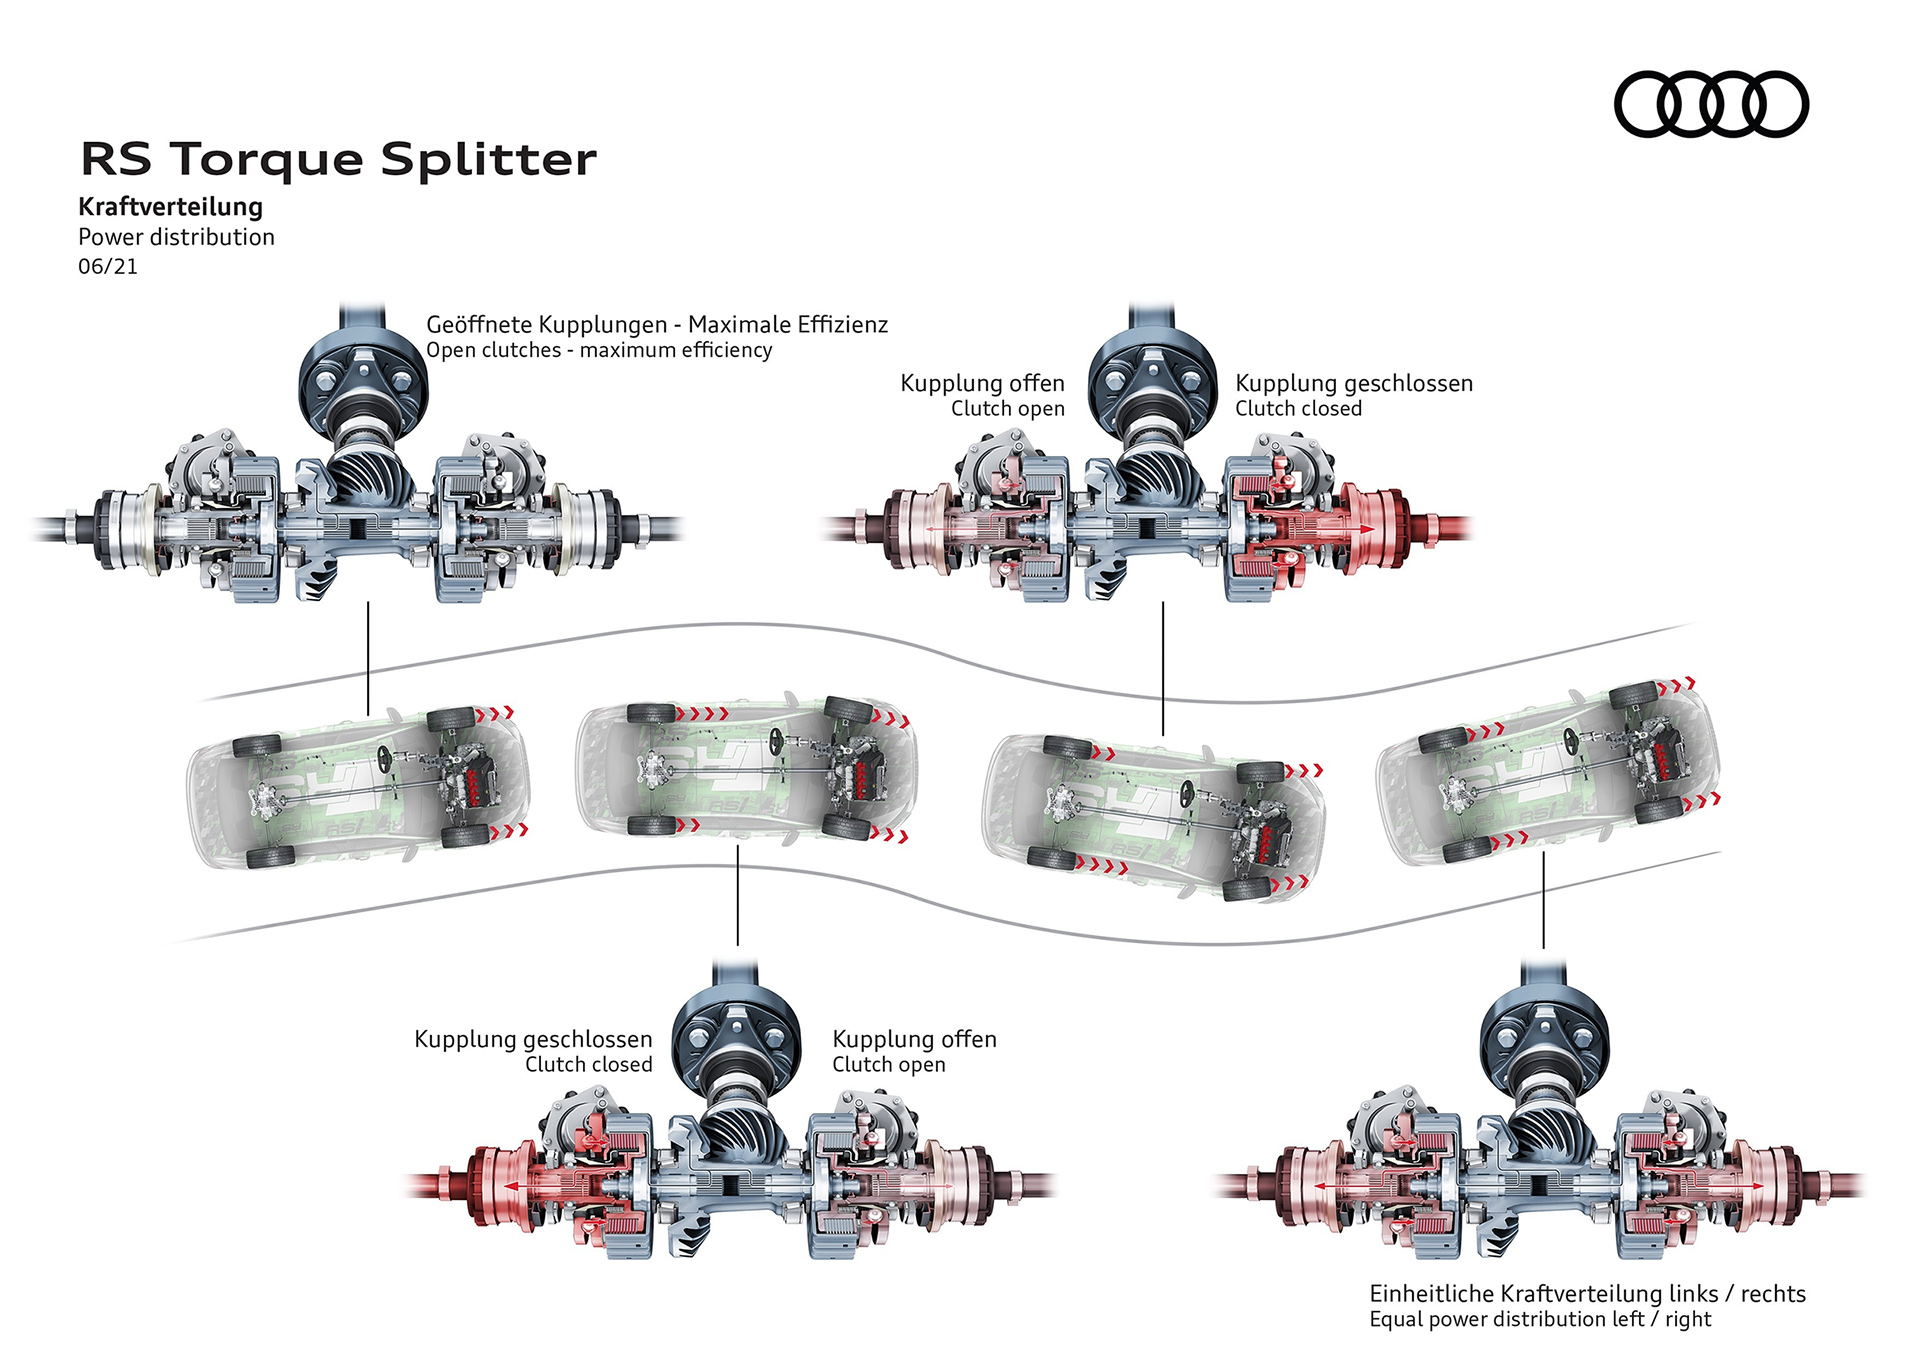 NEO AUDI RS 3 TORQUE SPLITTER 15 Πώς λειτουργεί το RS Torque Splitter του νέου Audi RS 3